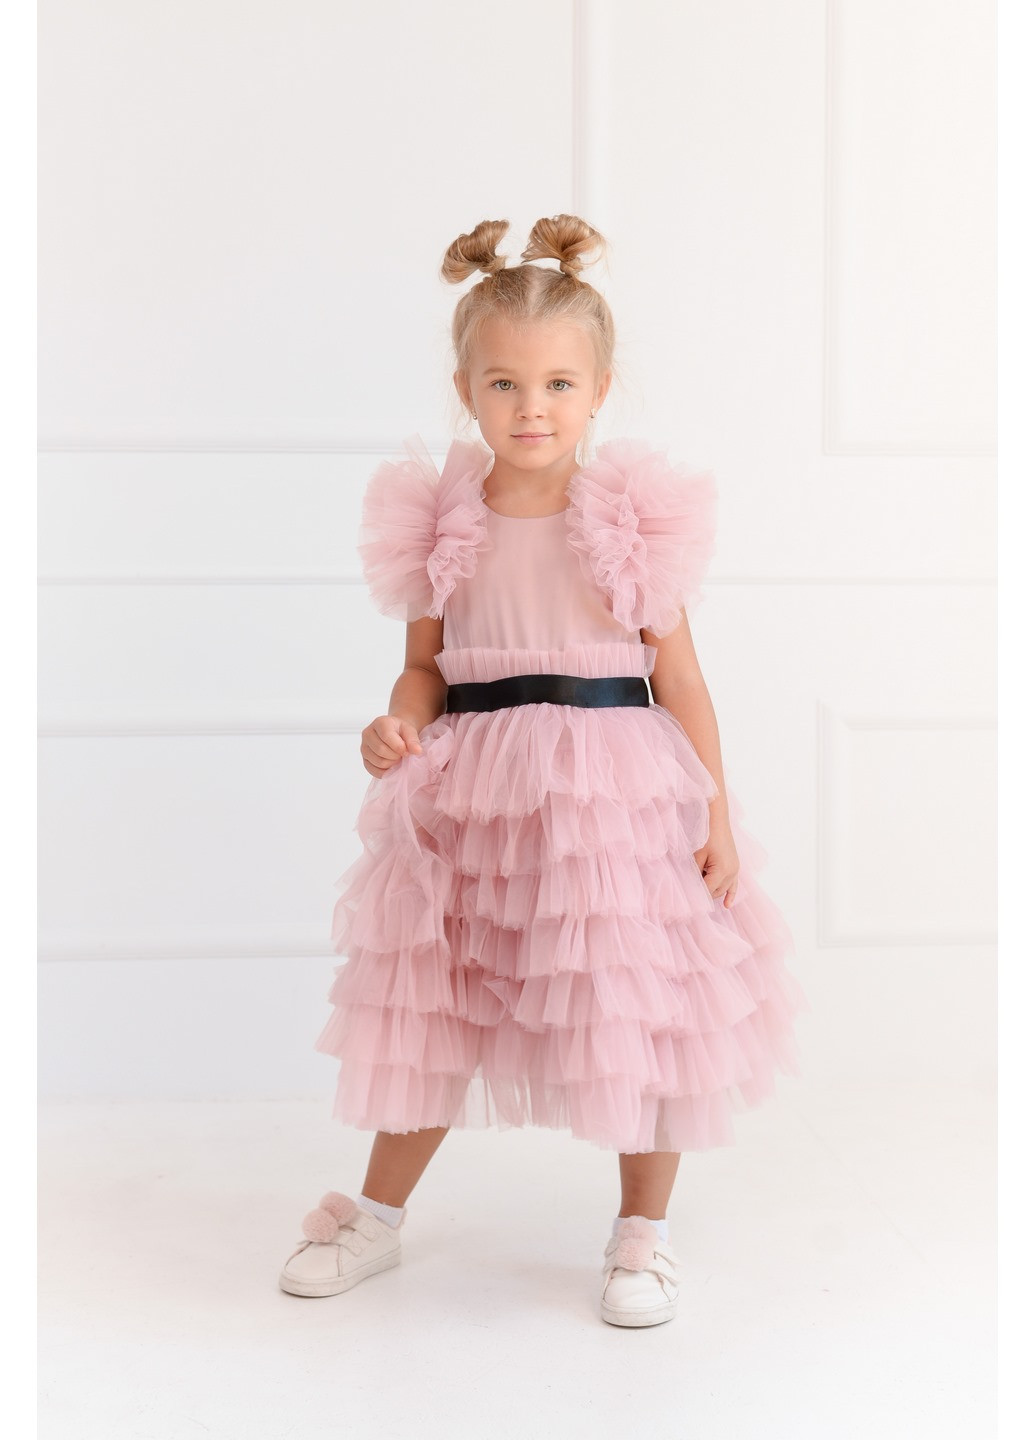 Розовое платье 10925 104 розовое Color Dreams (196894643)